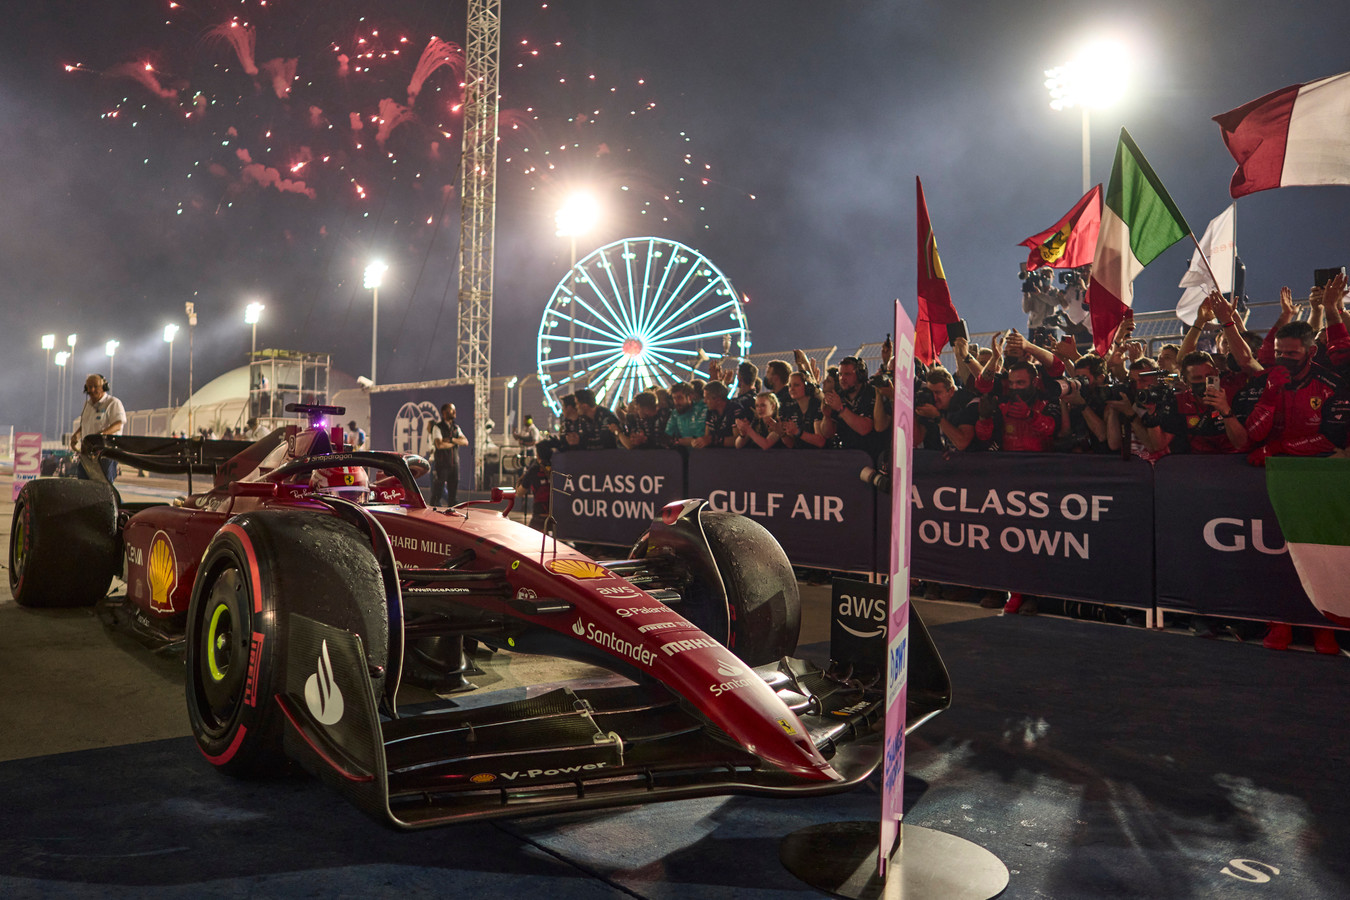 Bahrain Grand Prix 2022 - F1 Race